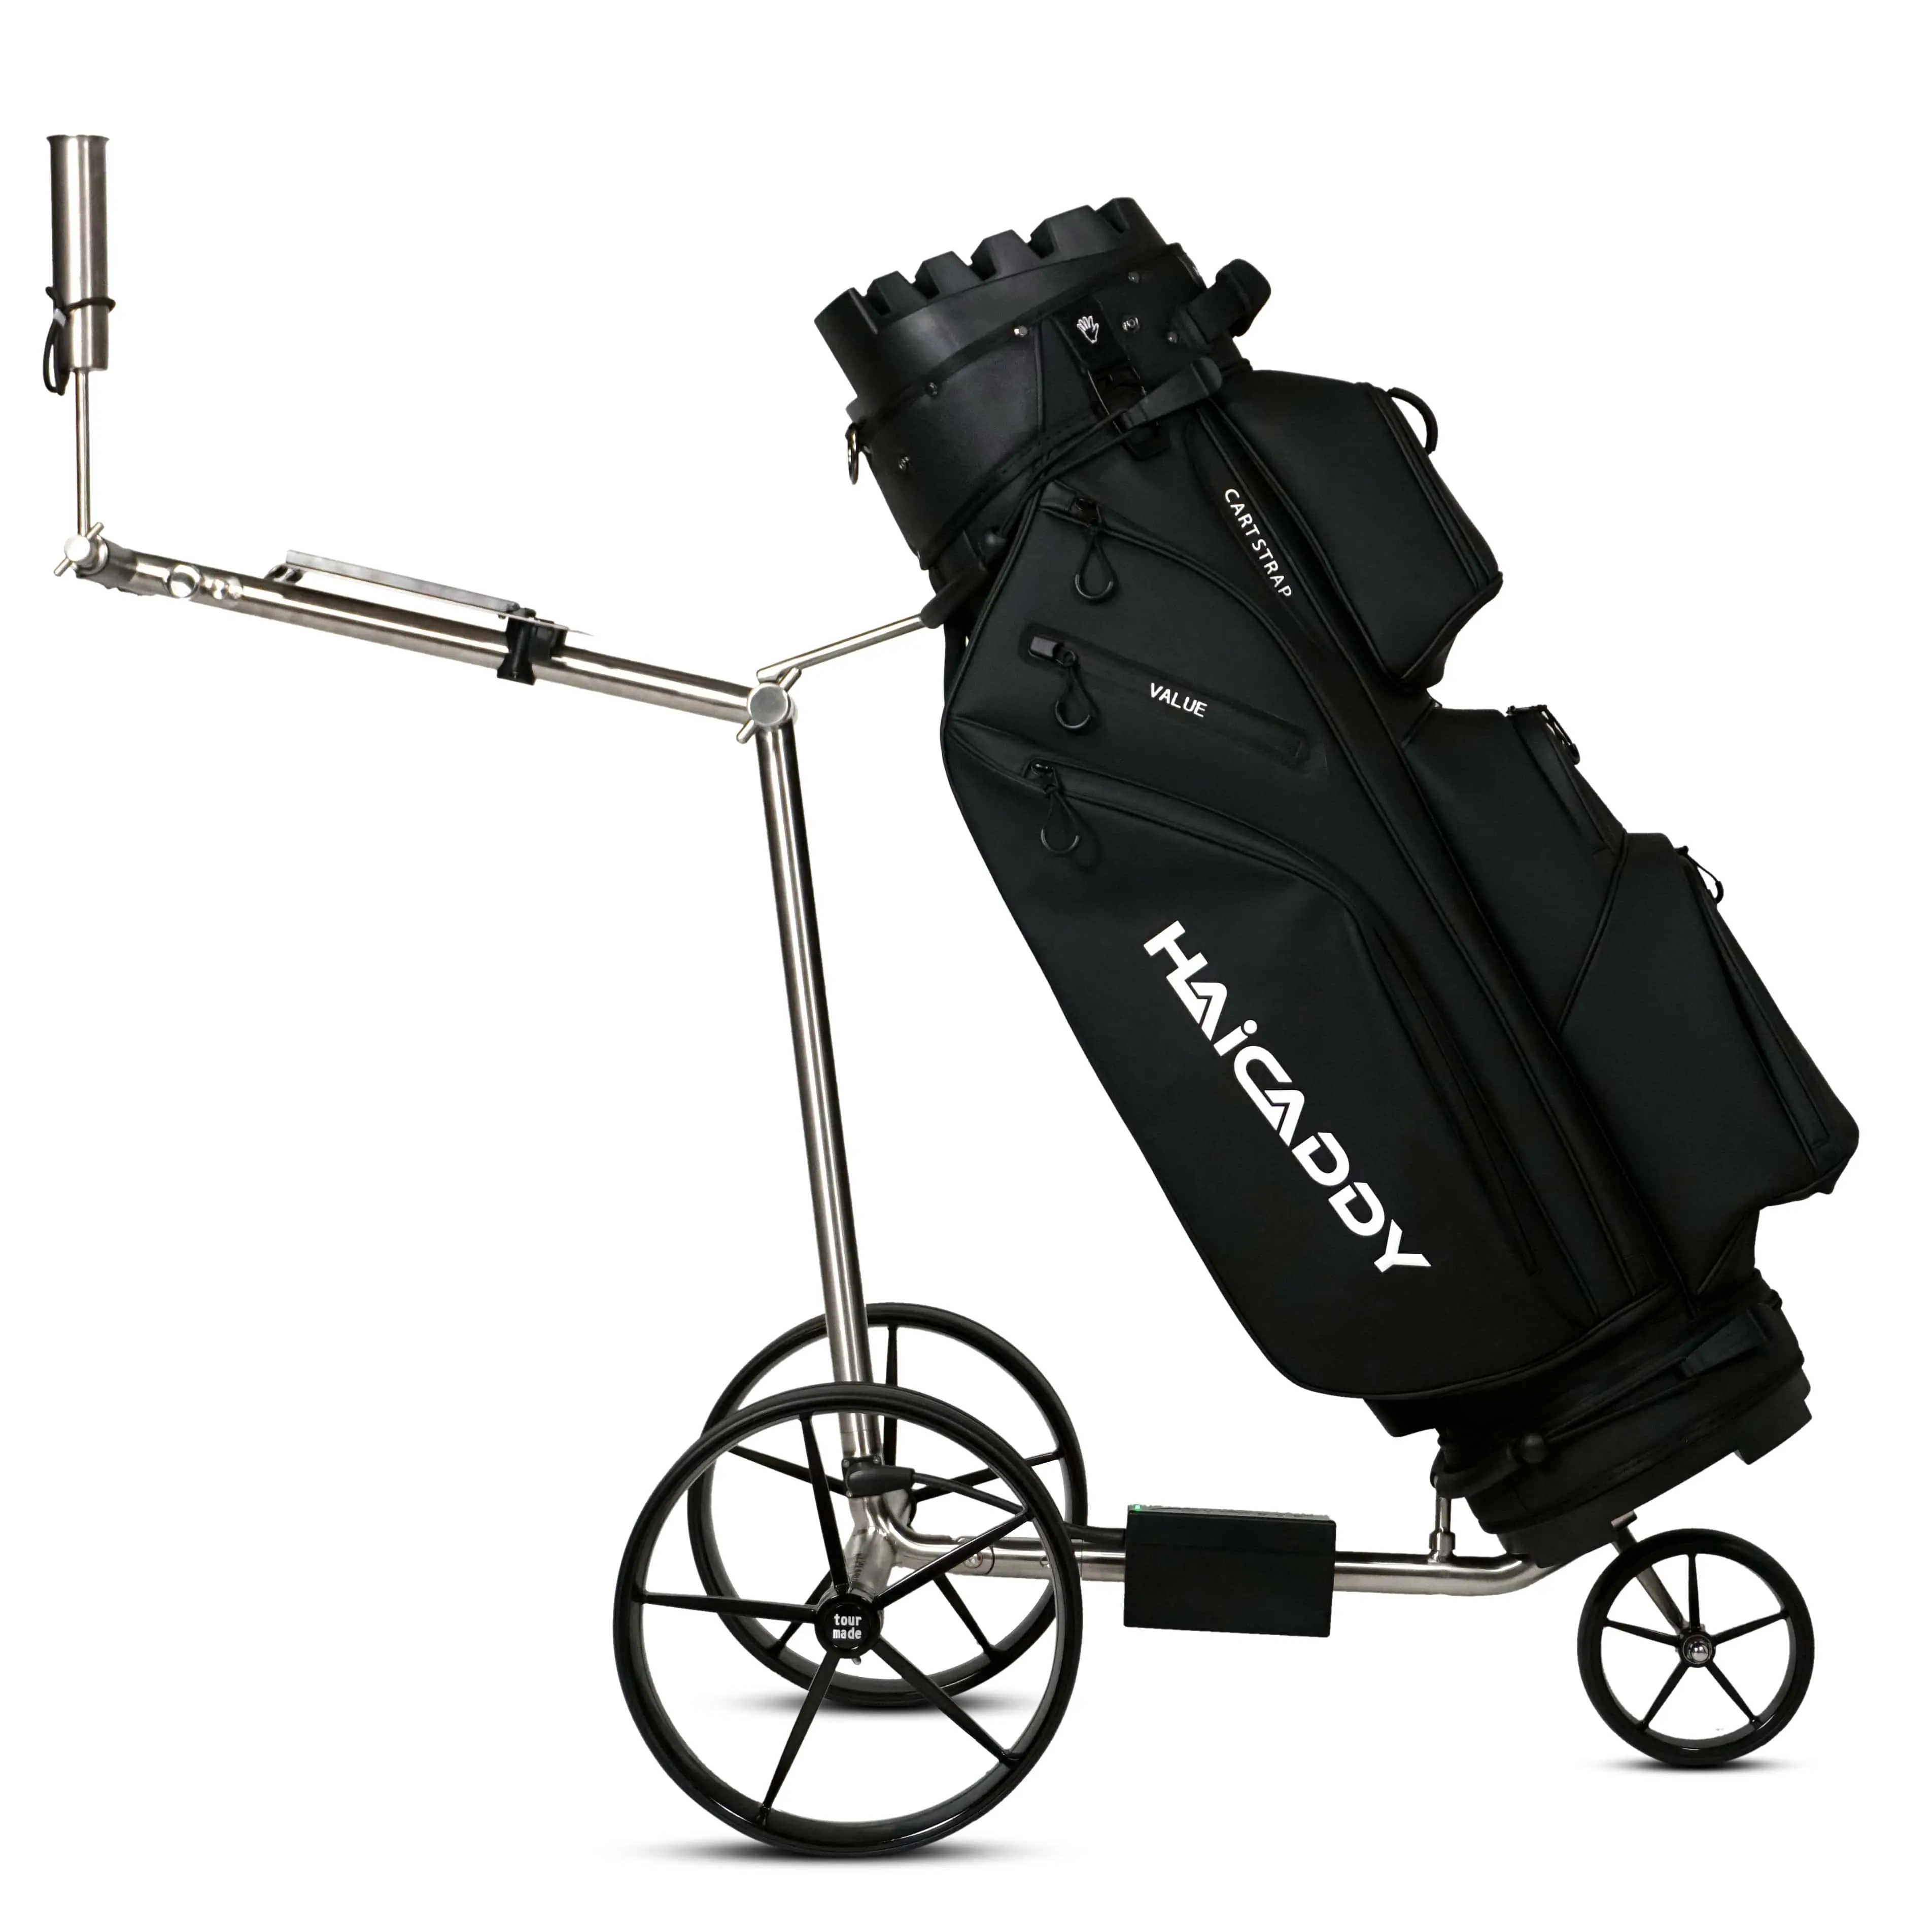 Carrello da golf elettrico Tour Made Haicaddy® HC9 con telaio spazzolato